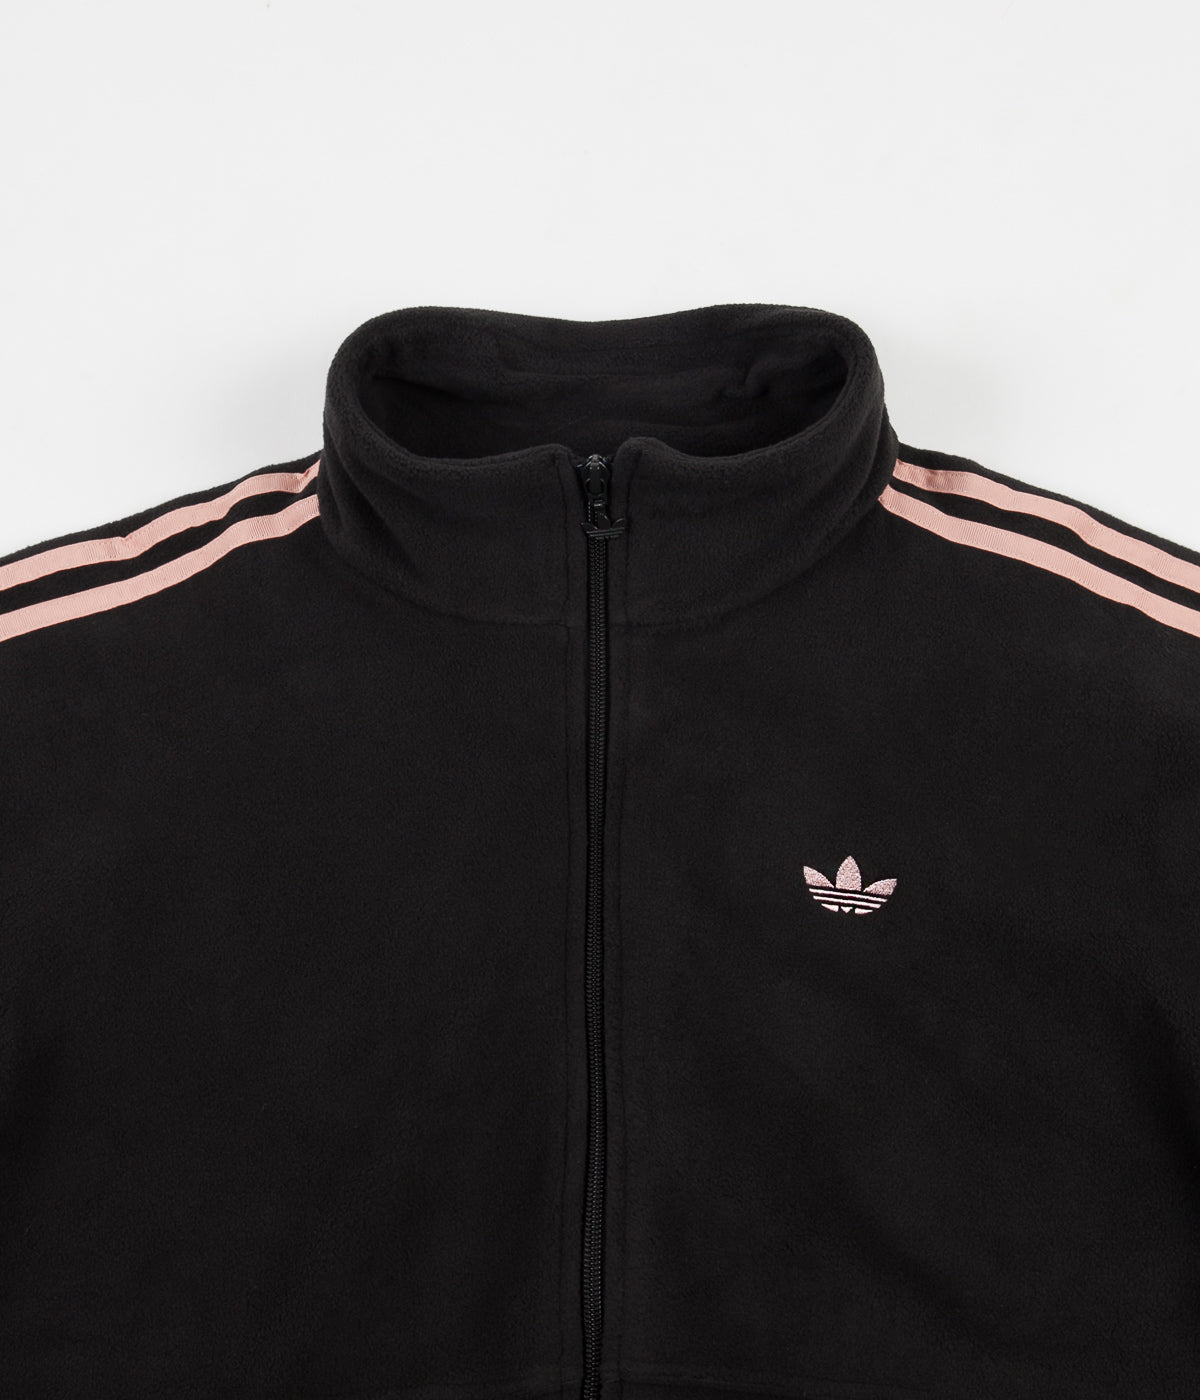 pink adidas jacket with black stripes